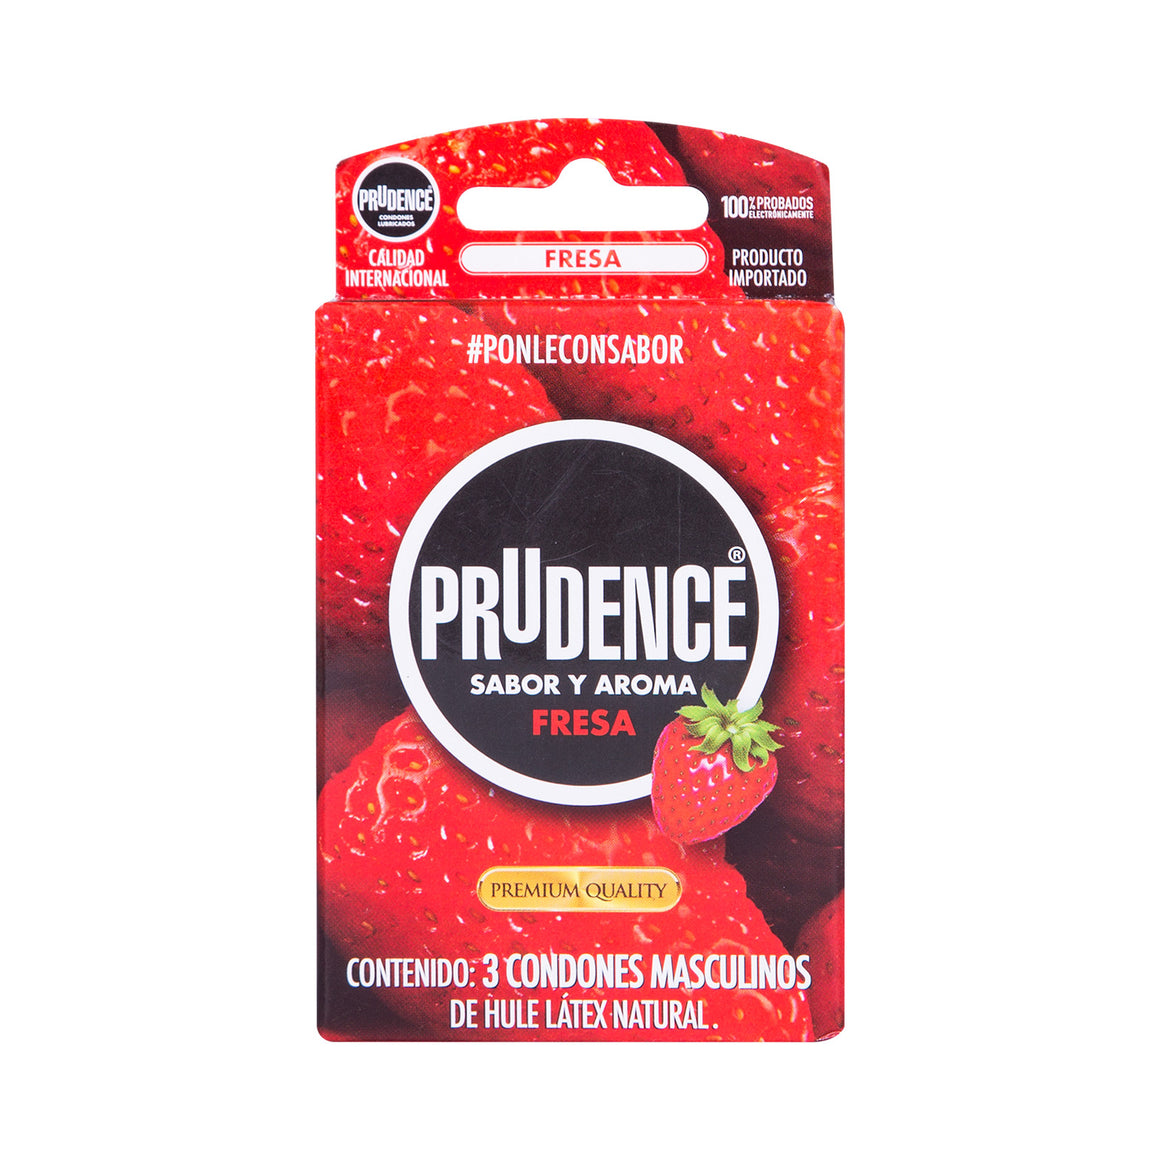 Preservativos Prudence Fresa Super Farmacia Universal